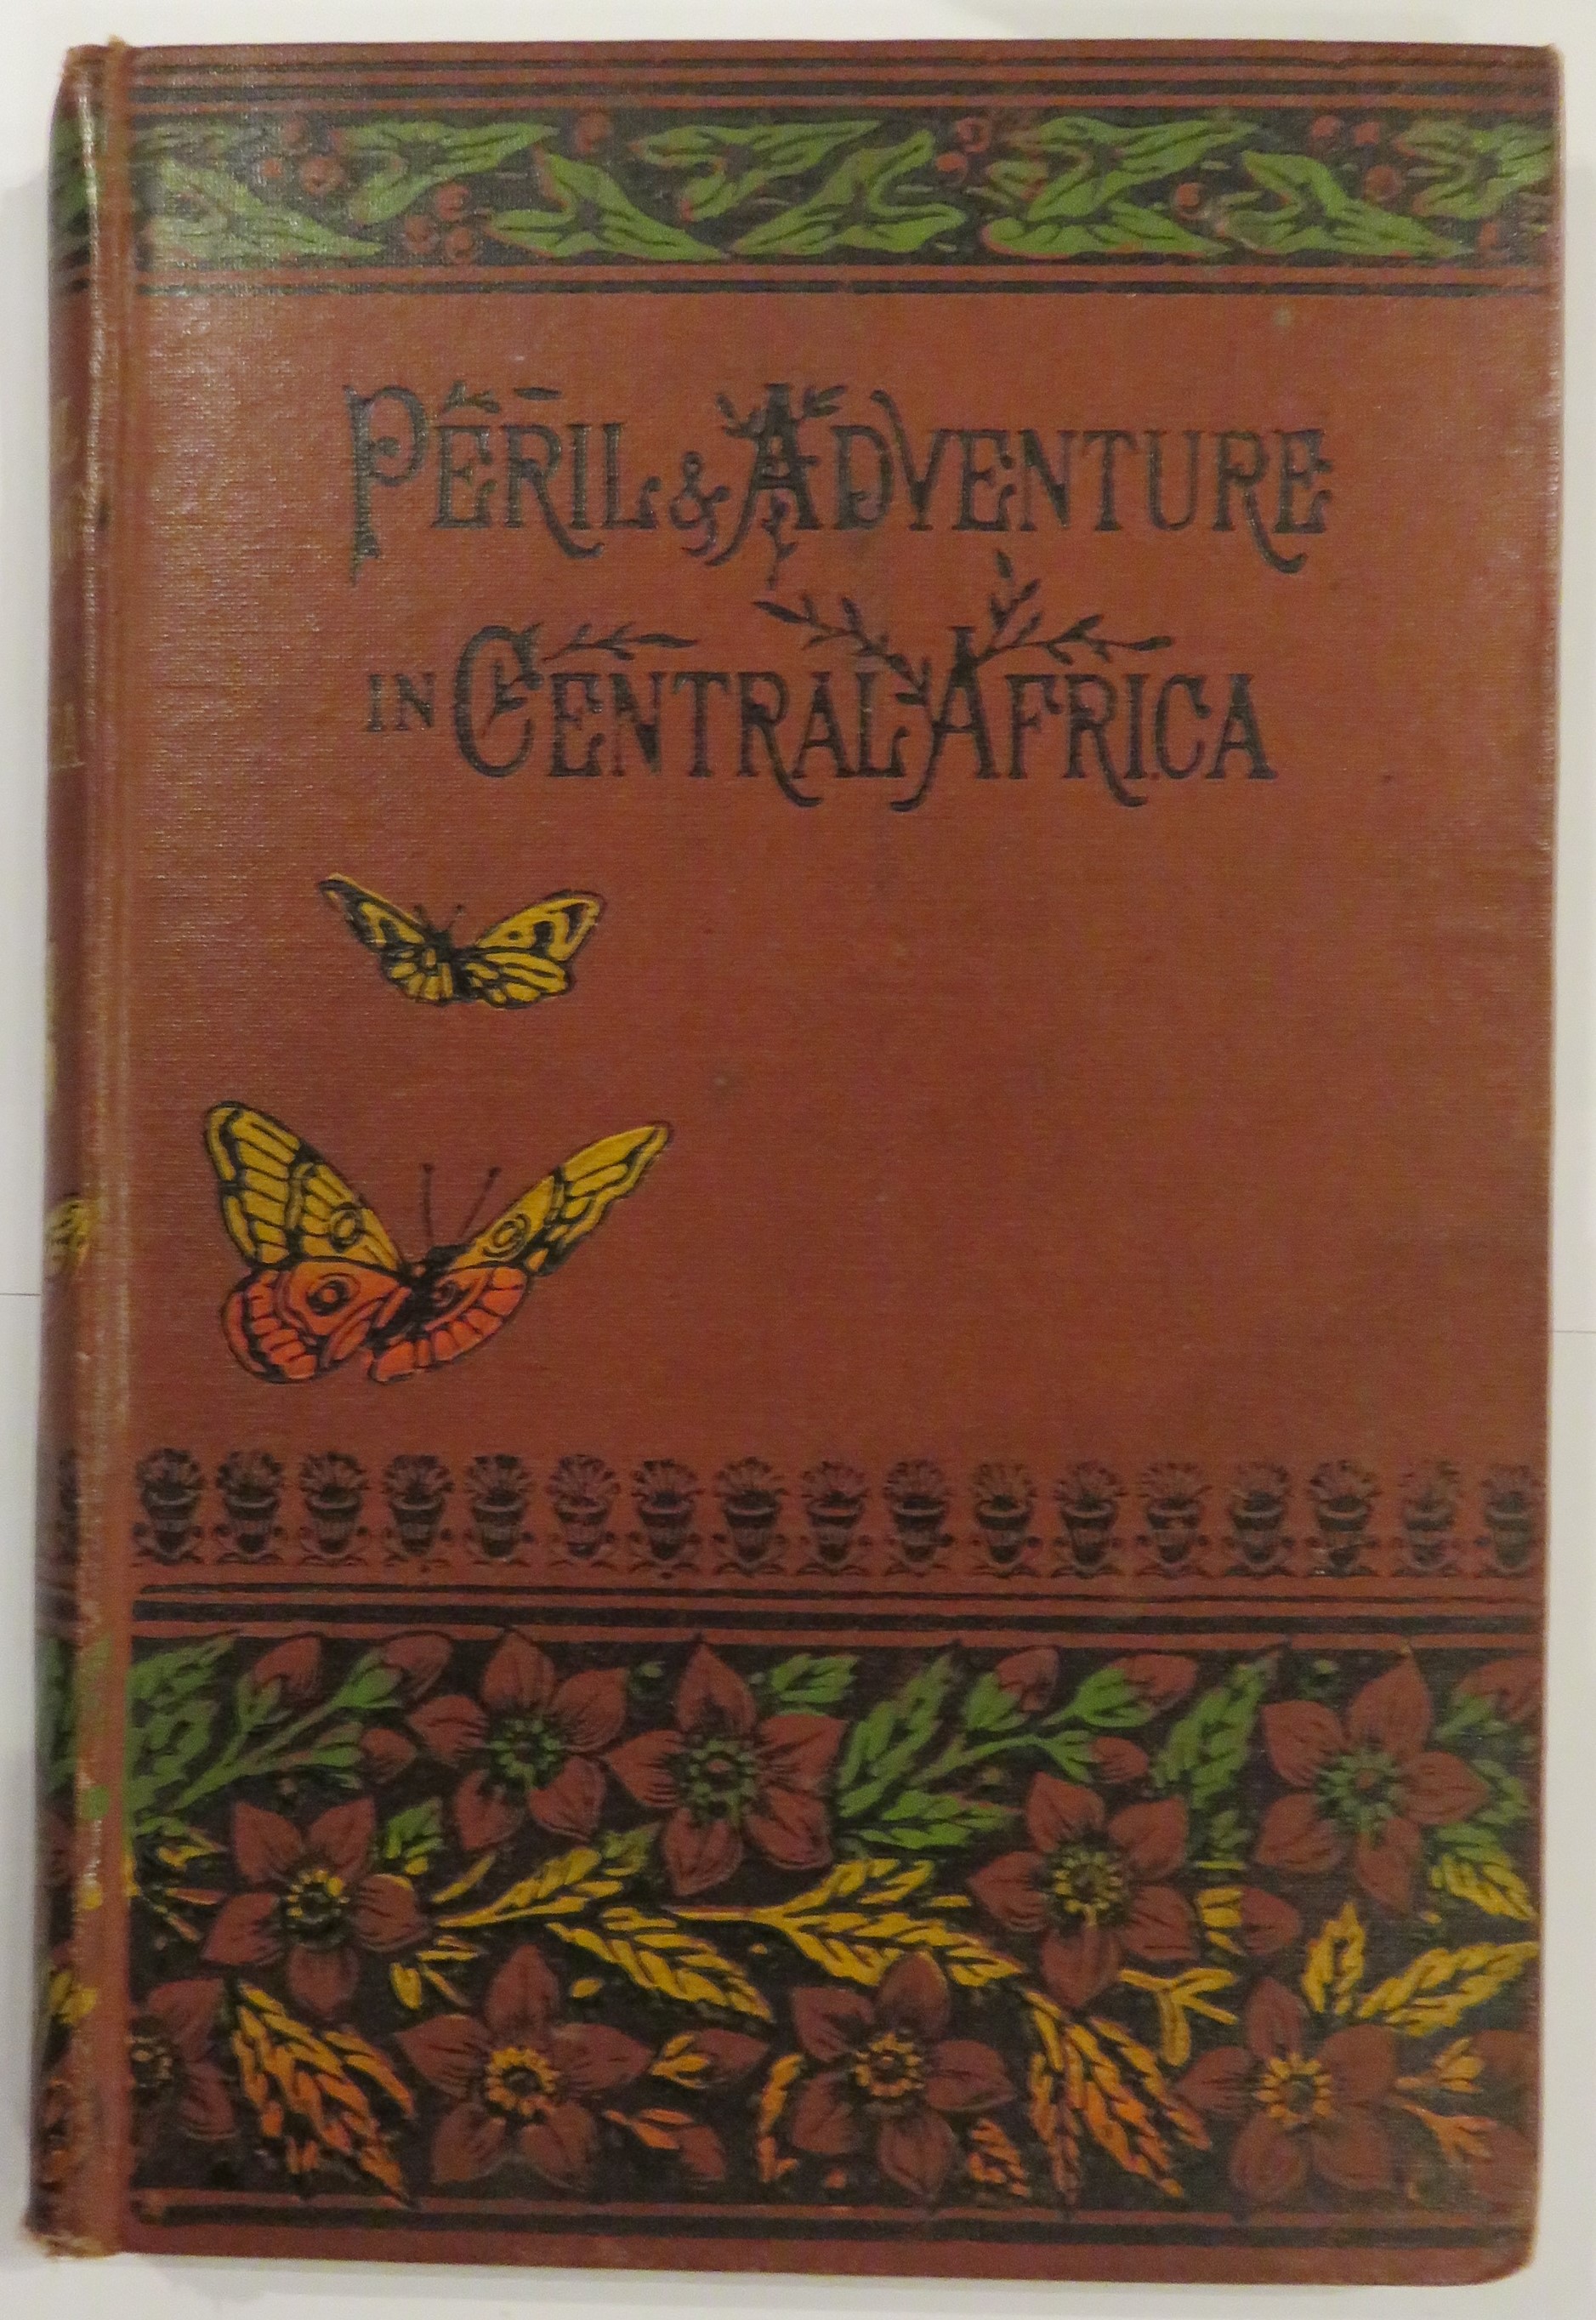 Peril & Adventure in Central Africa